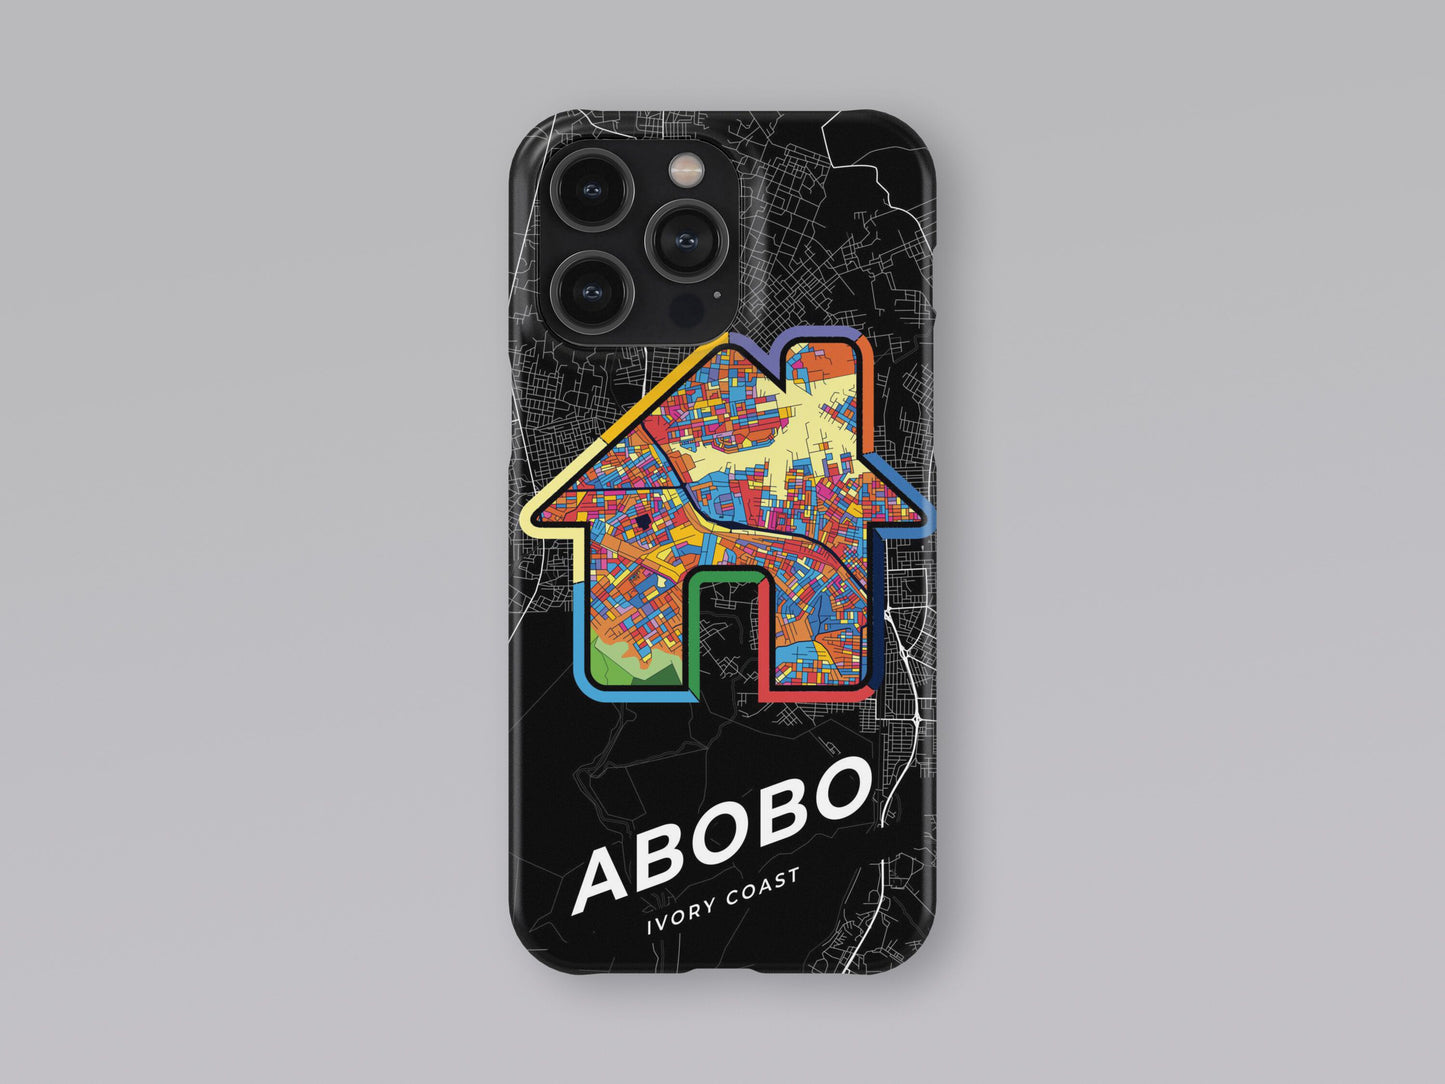 Abobo Ivory Coast slim phone case with colorful icon. Birthday, wedding or housewarming gift. Couple match cases. 3